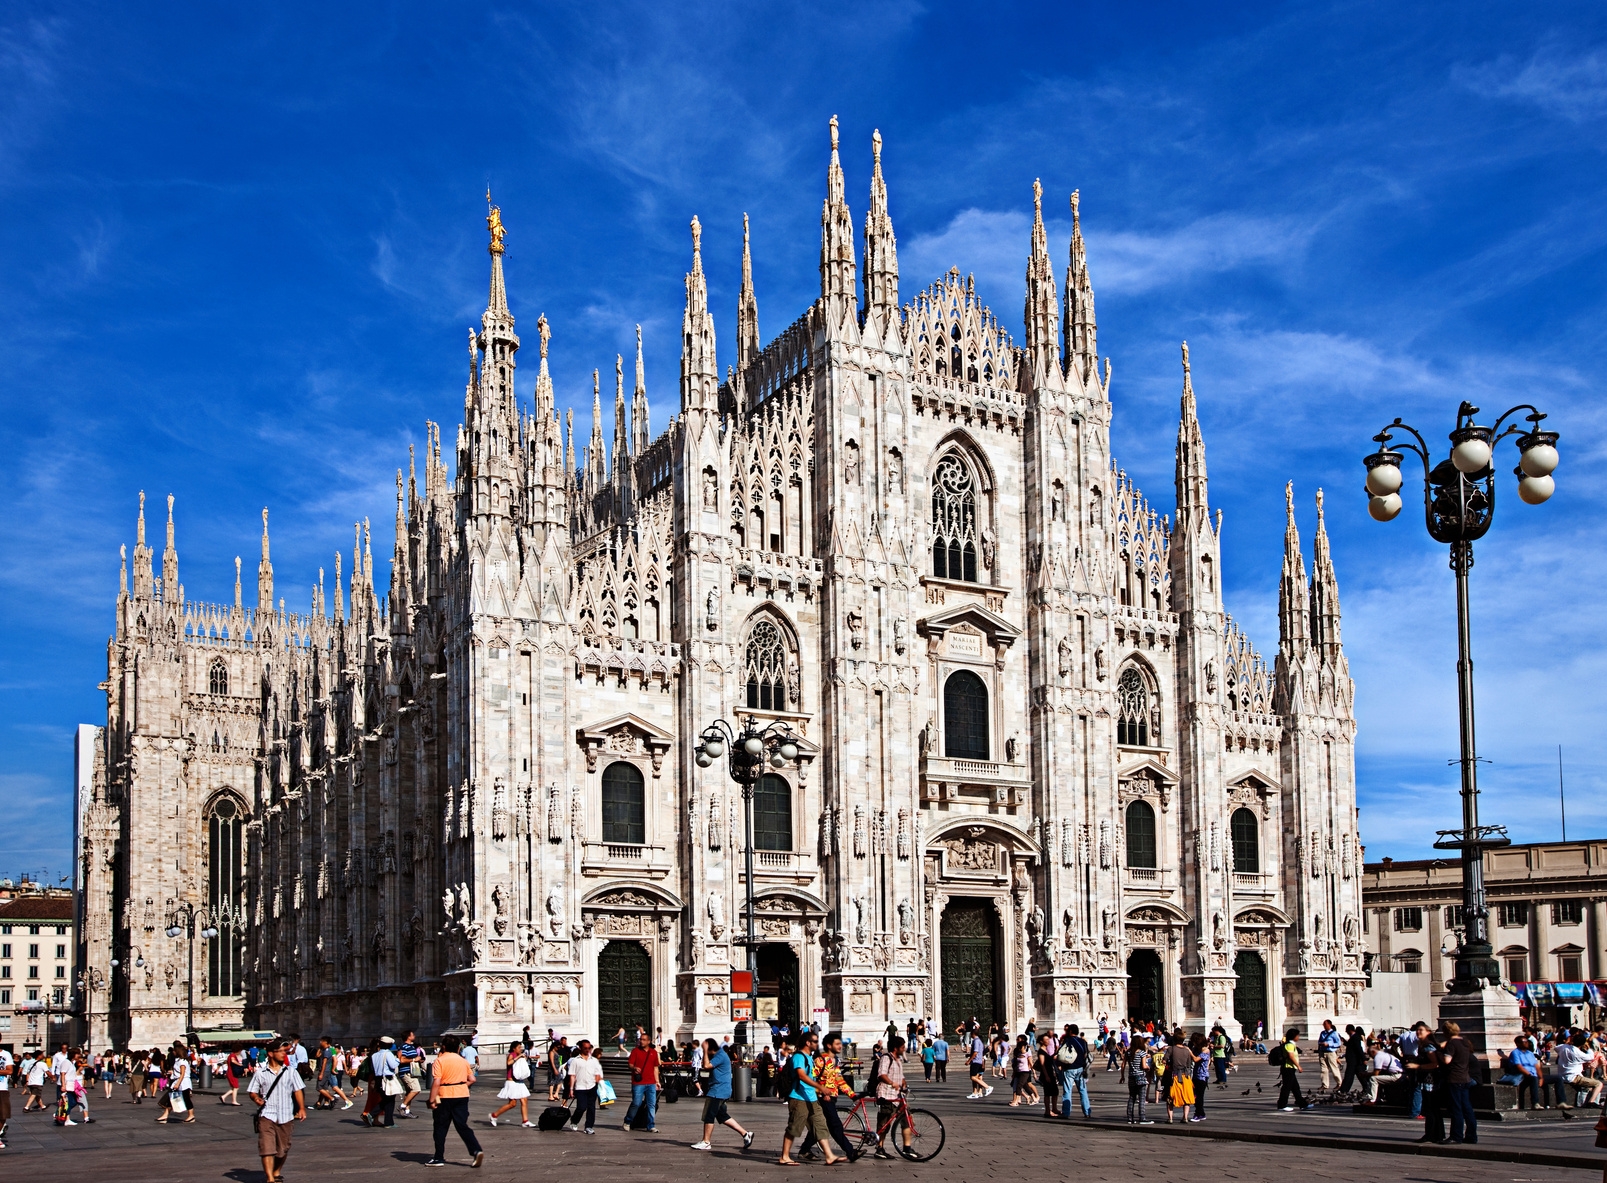 Milan Cathedral / Duomo di Milano, The Most Popular